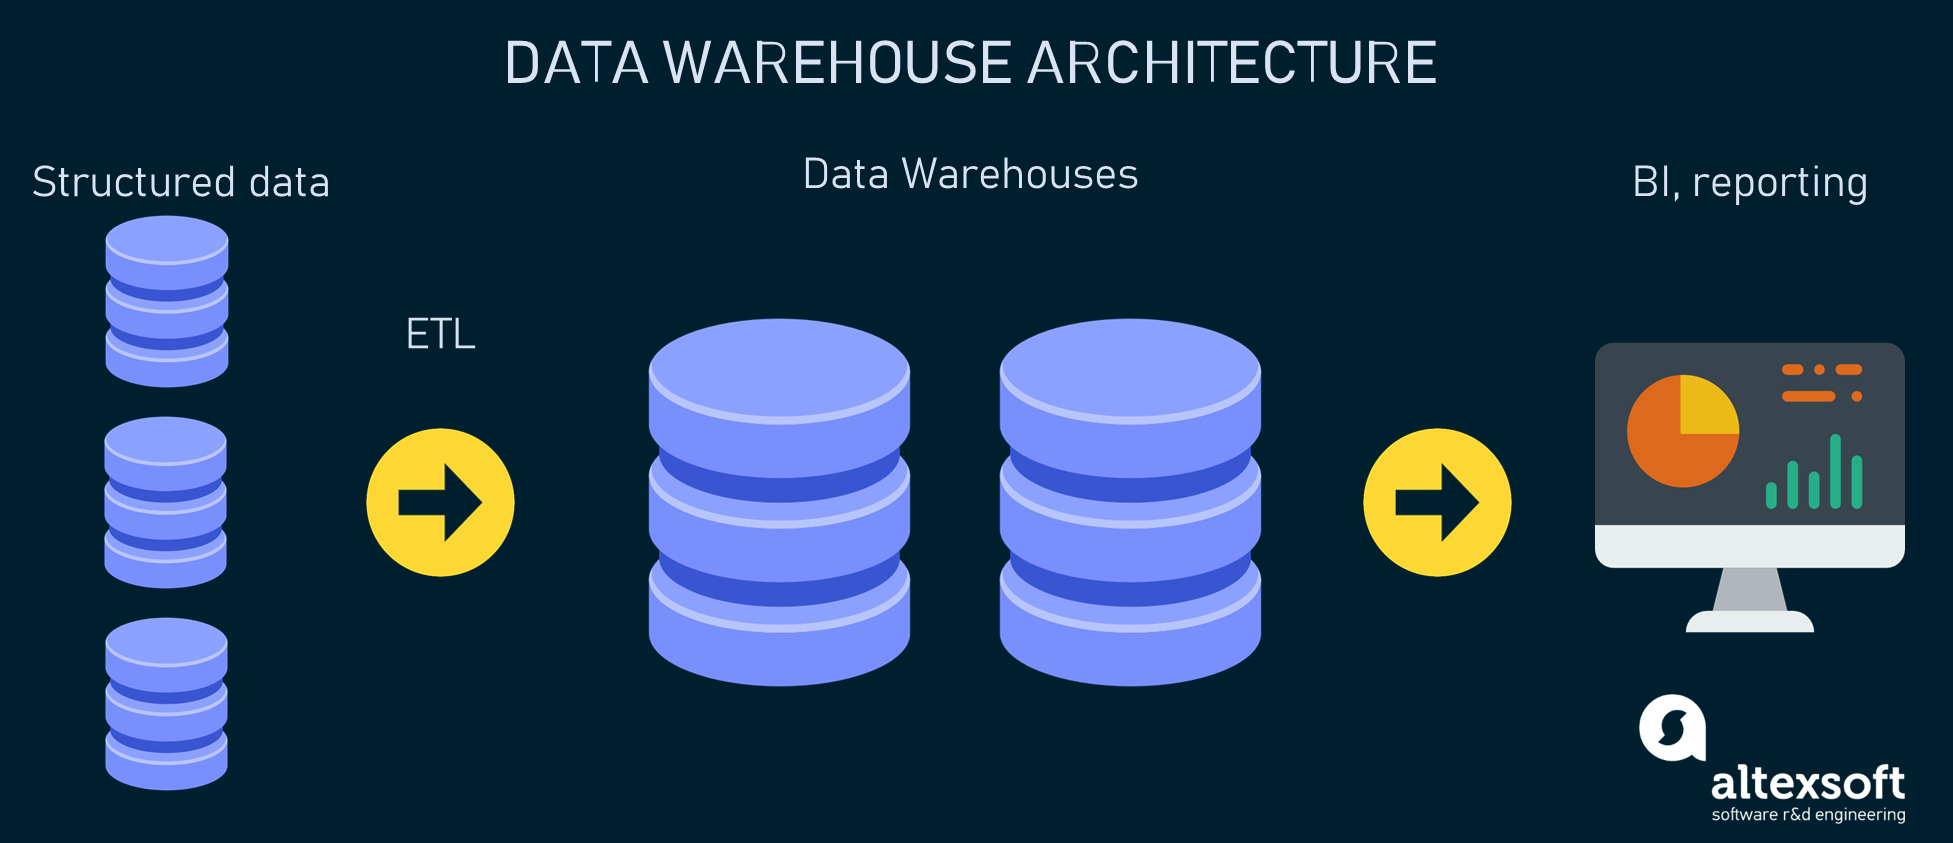 Traditional data warehouse platform architecture